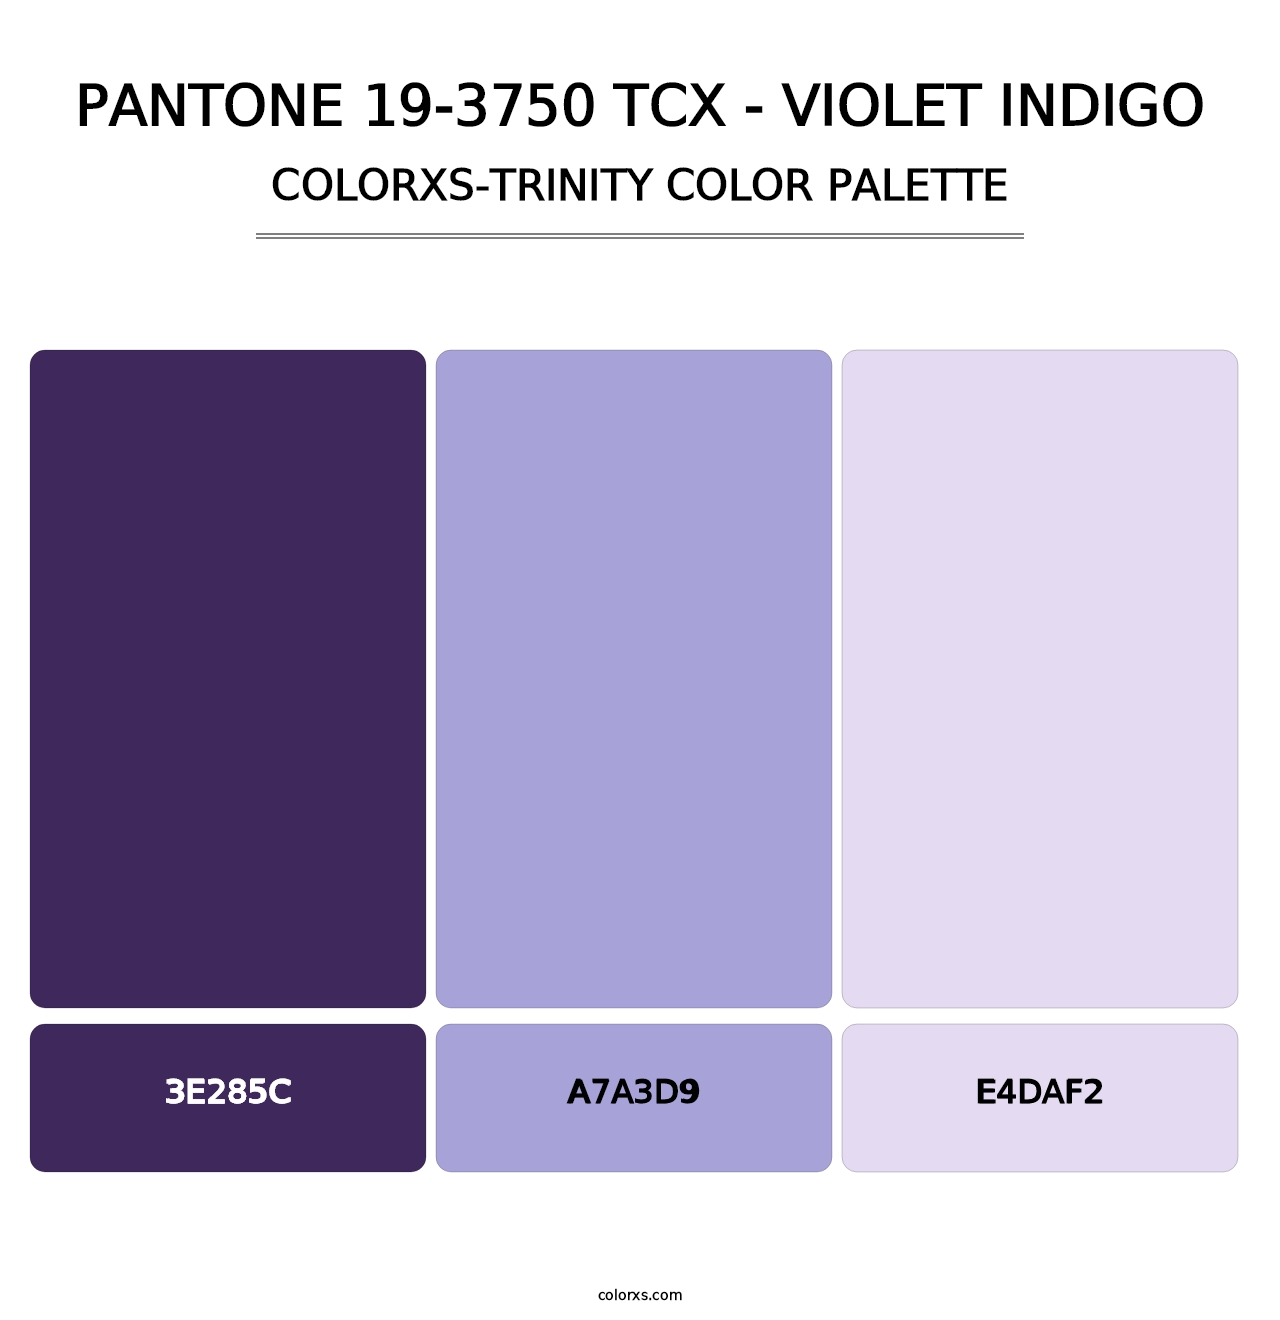 PANTONE 19-3750 TCX - Violet Indigo - Colorxs Trinity Palette